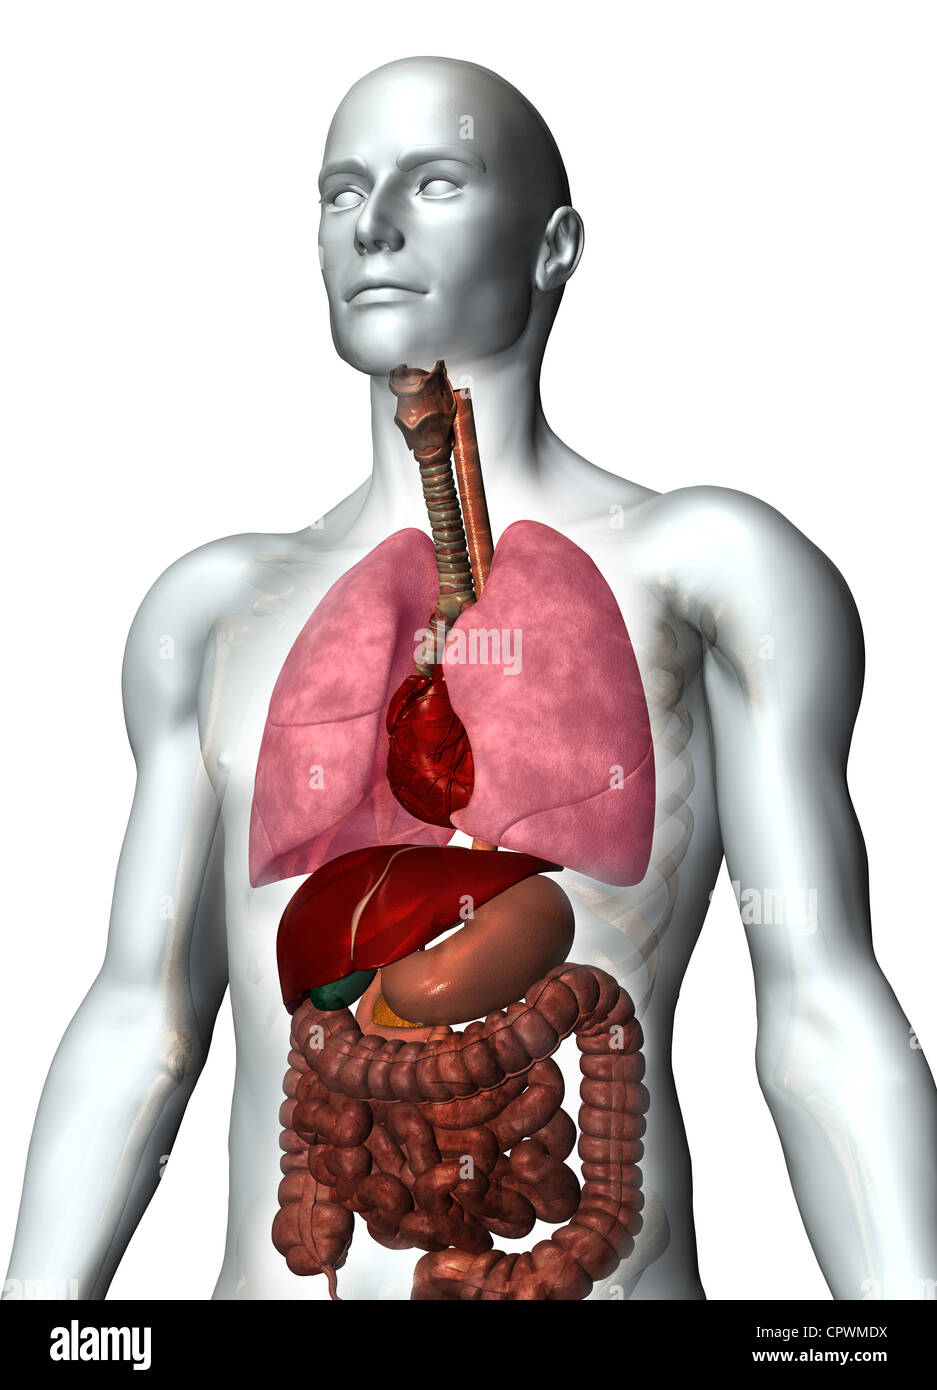 Anatomical illustration of the human body Stock Photo